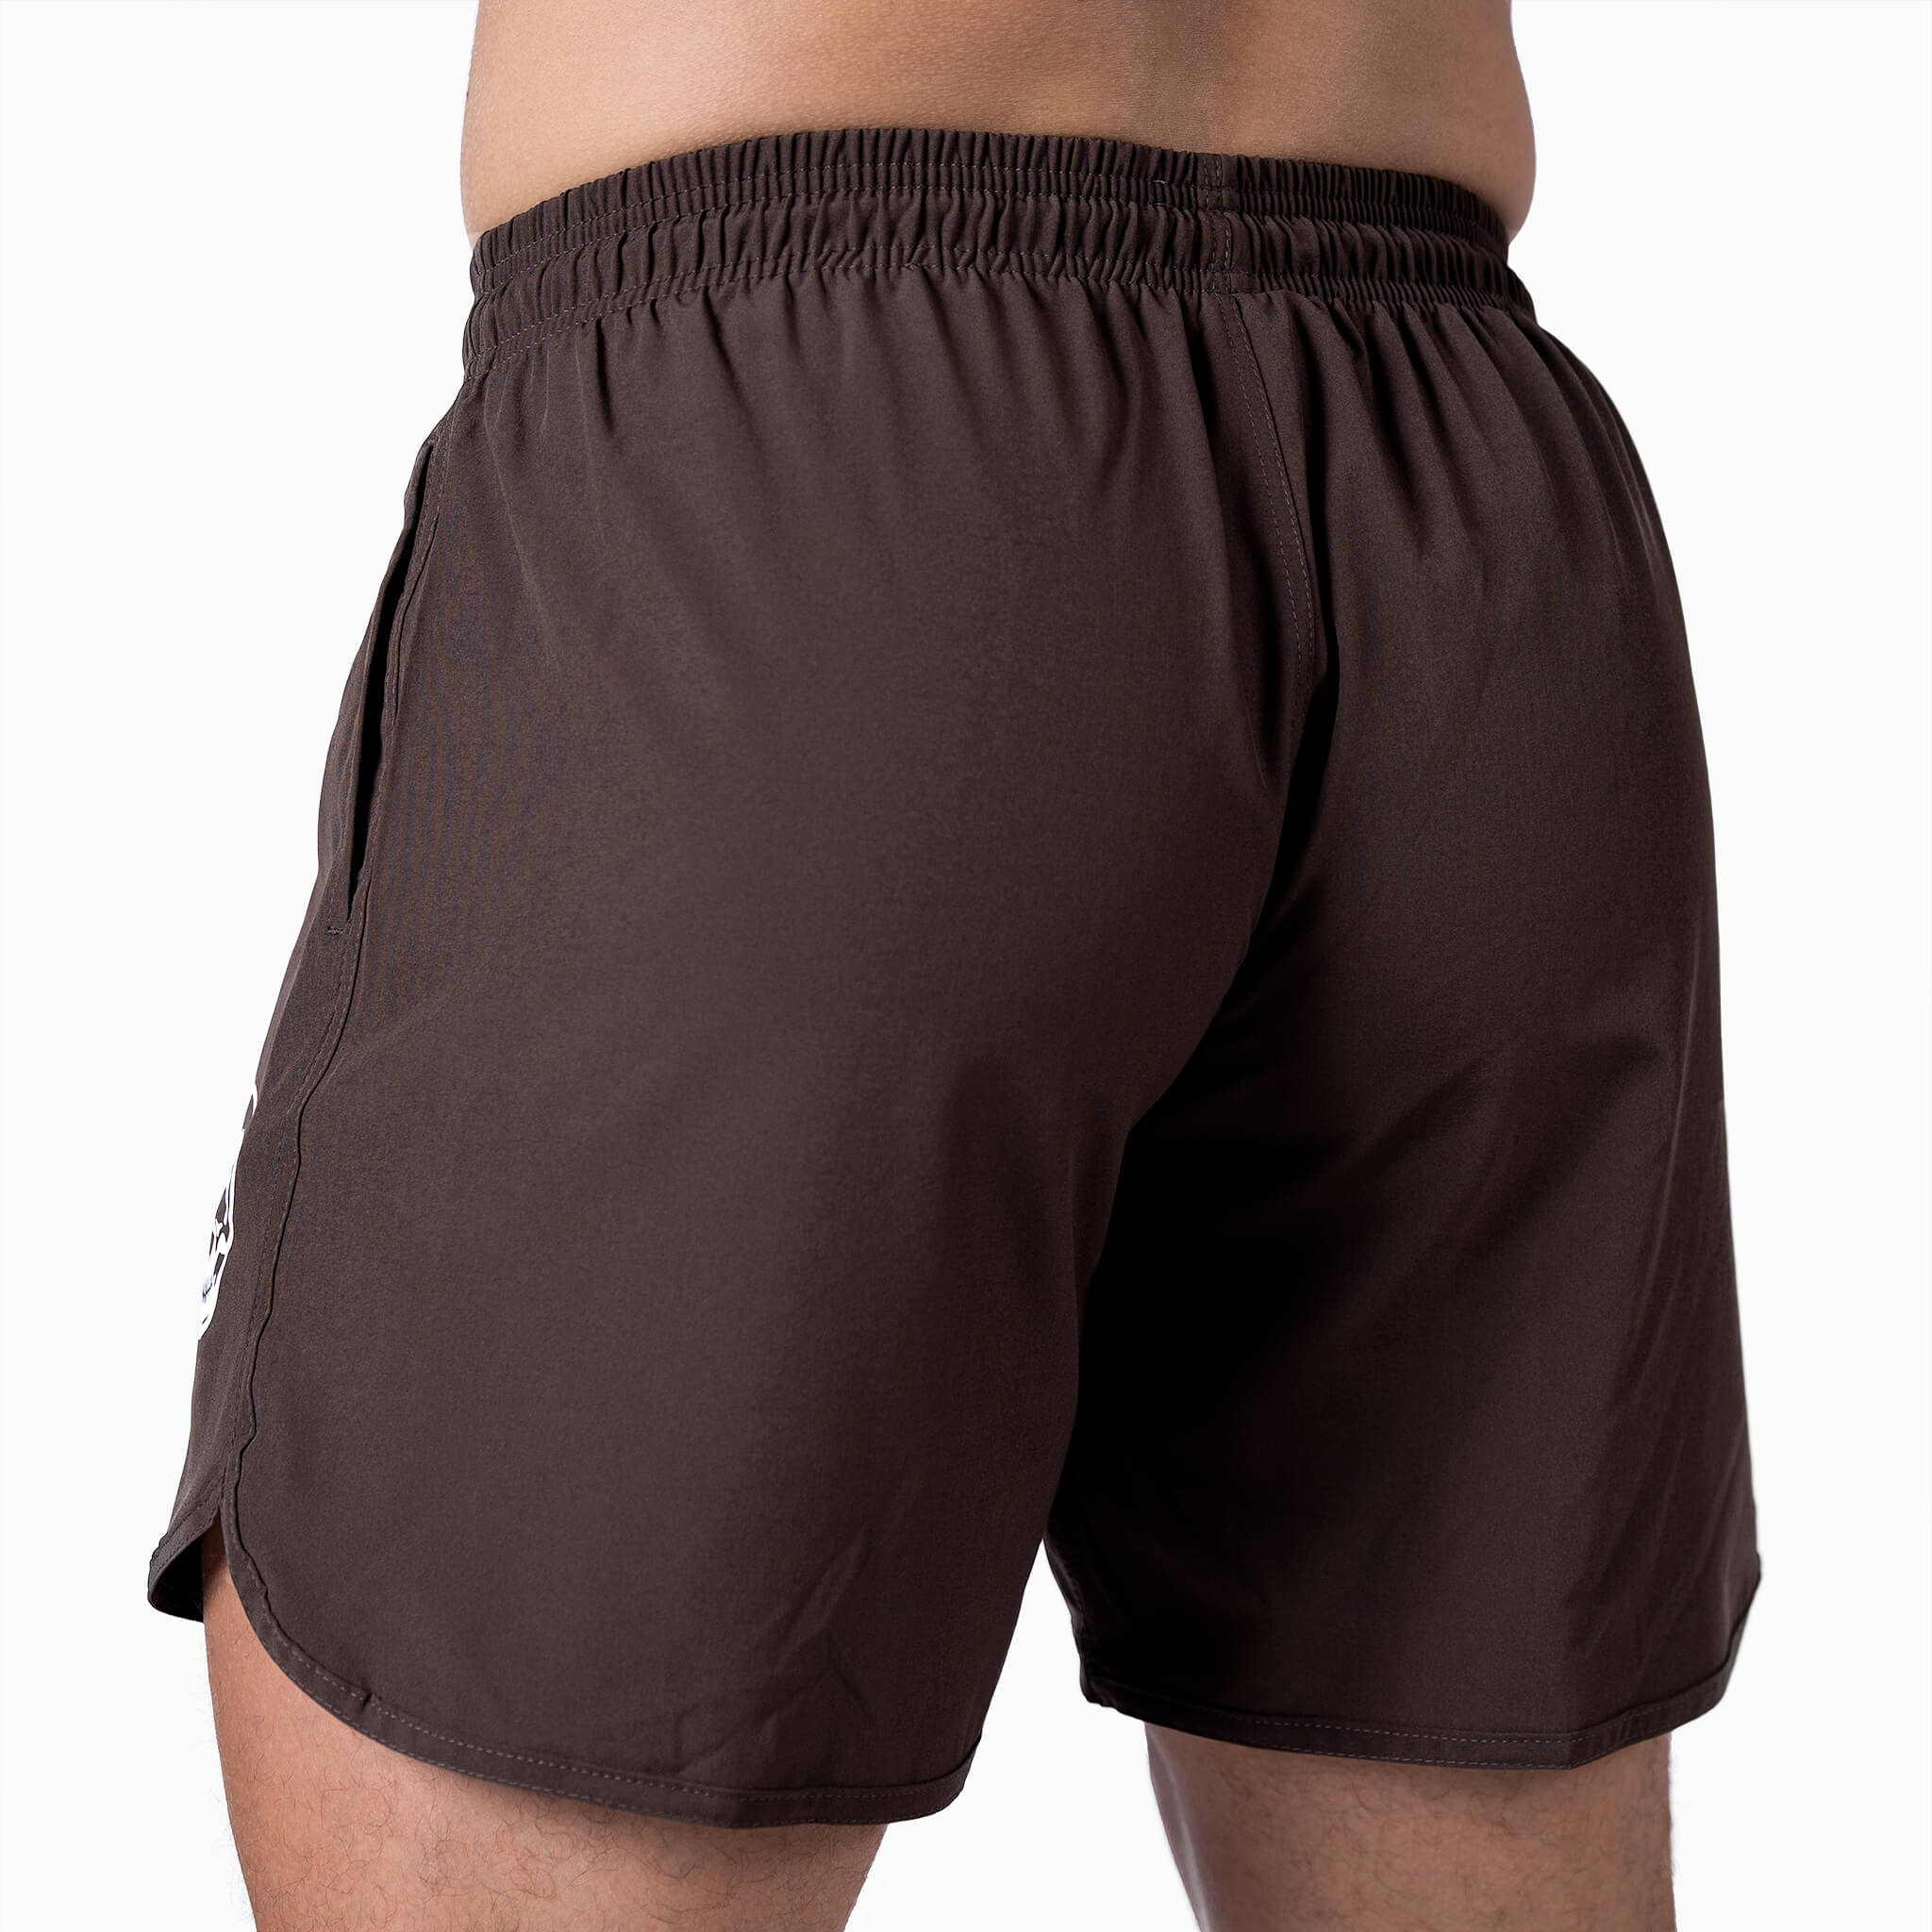 workout shorts brown